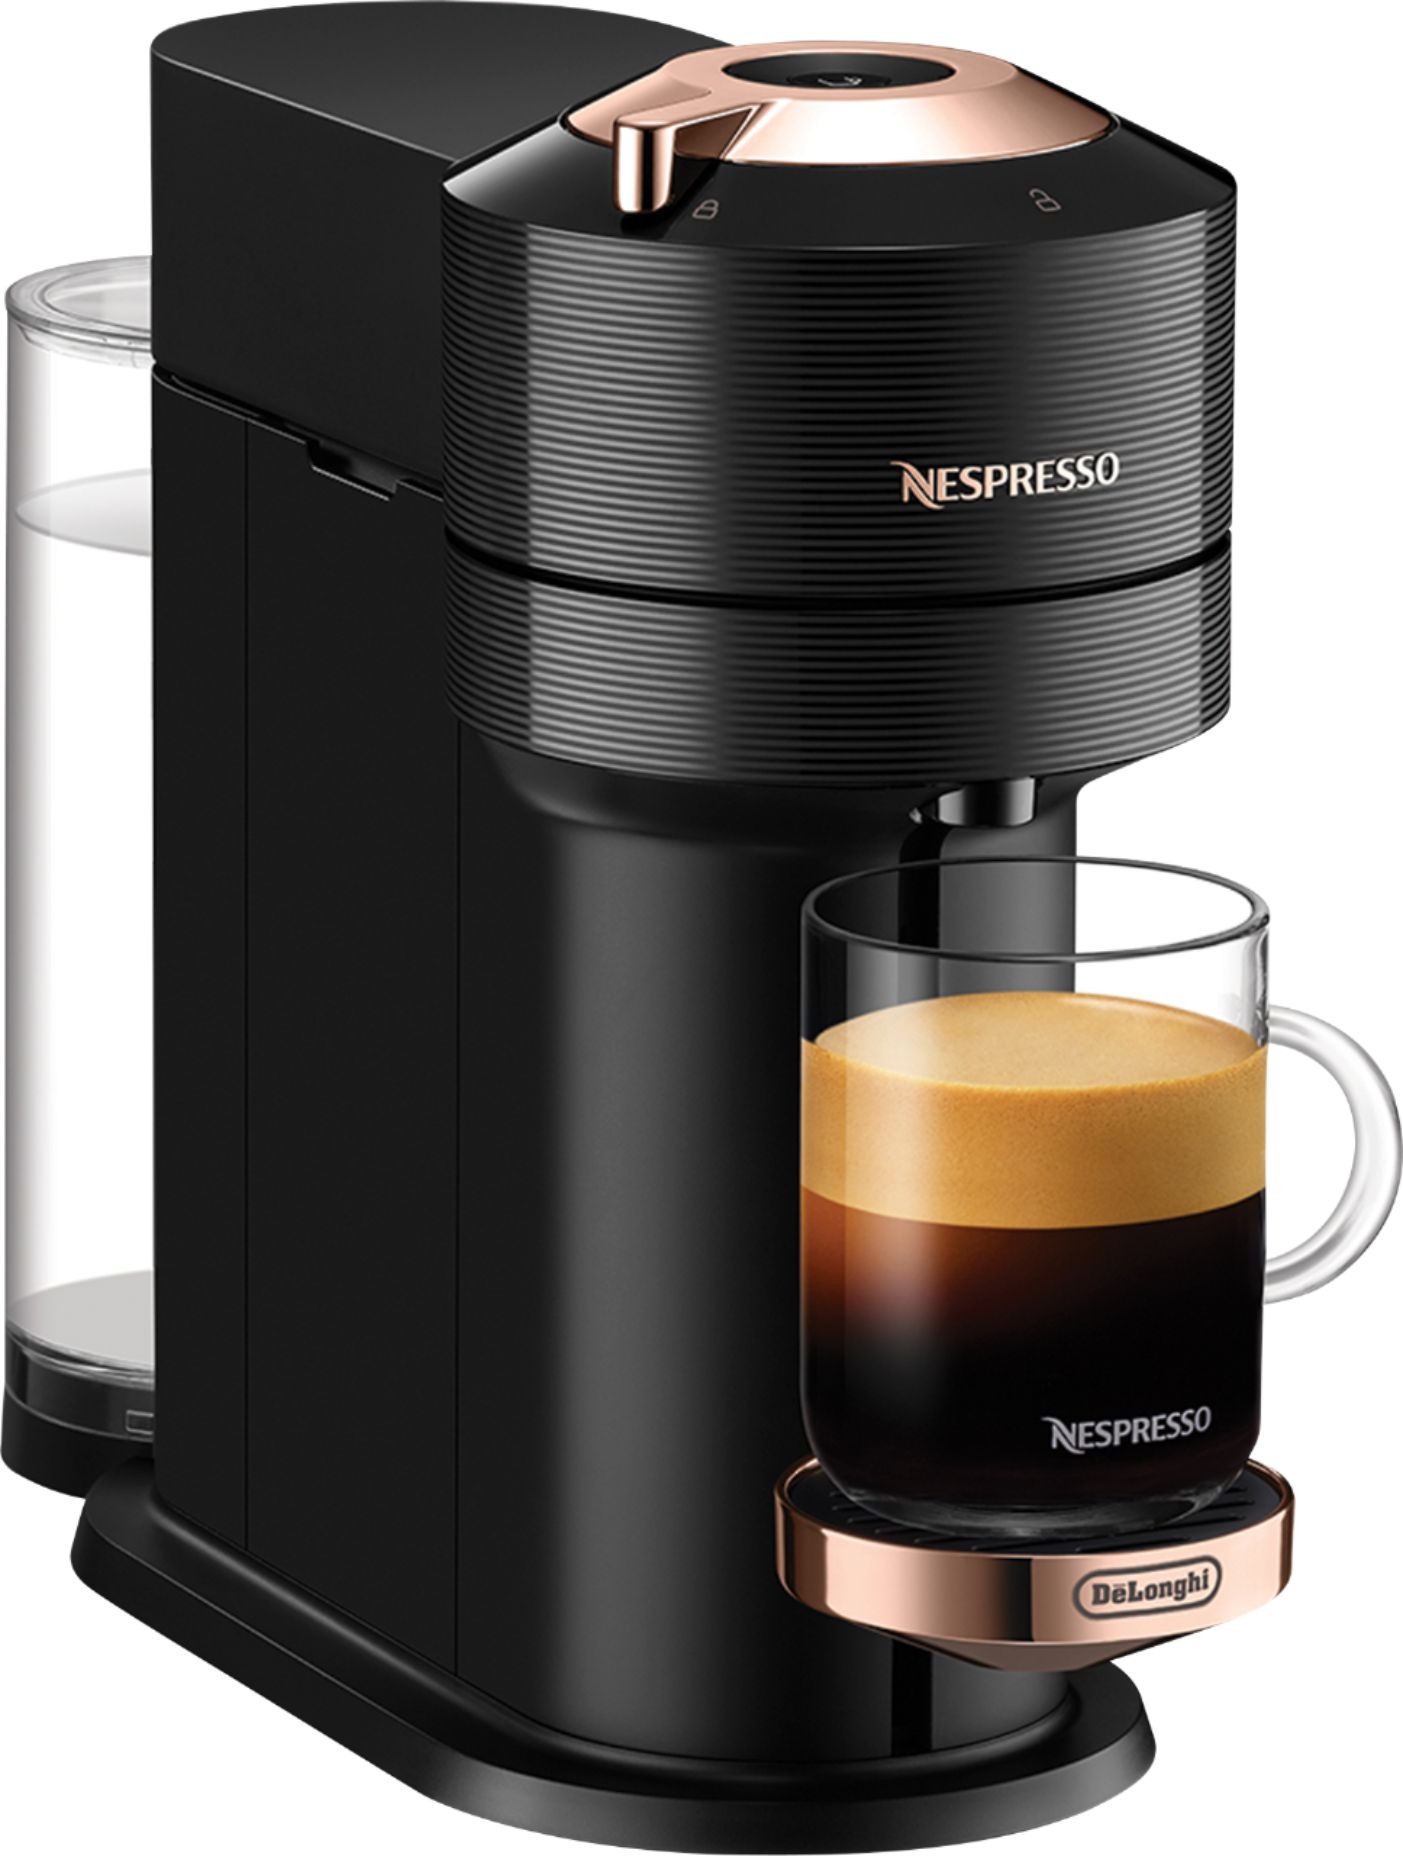 Angle View: Nespresso Vertuo Next Premium Coffee and Espresso Maker by De'Longhi,  Black Rose Gold - Black Rose Gold